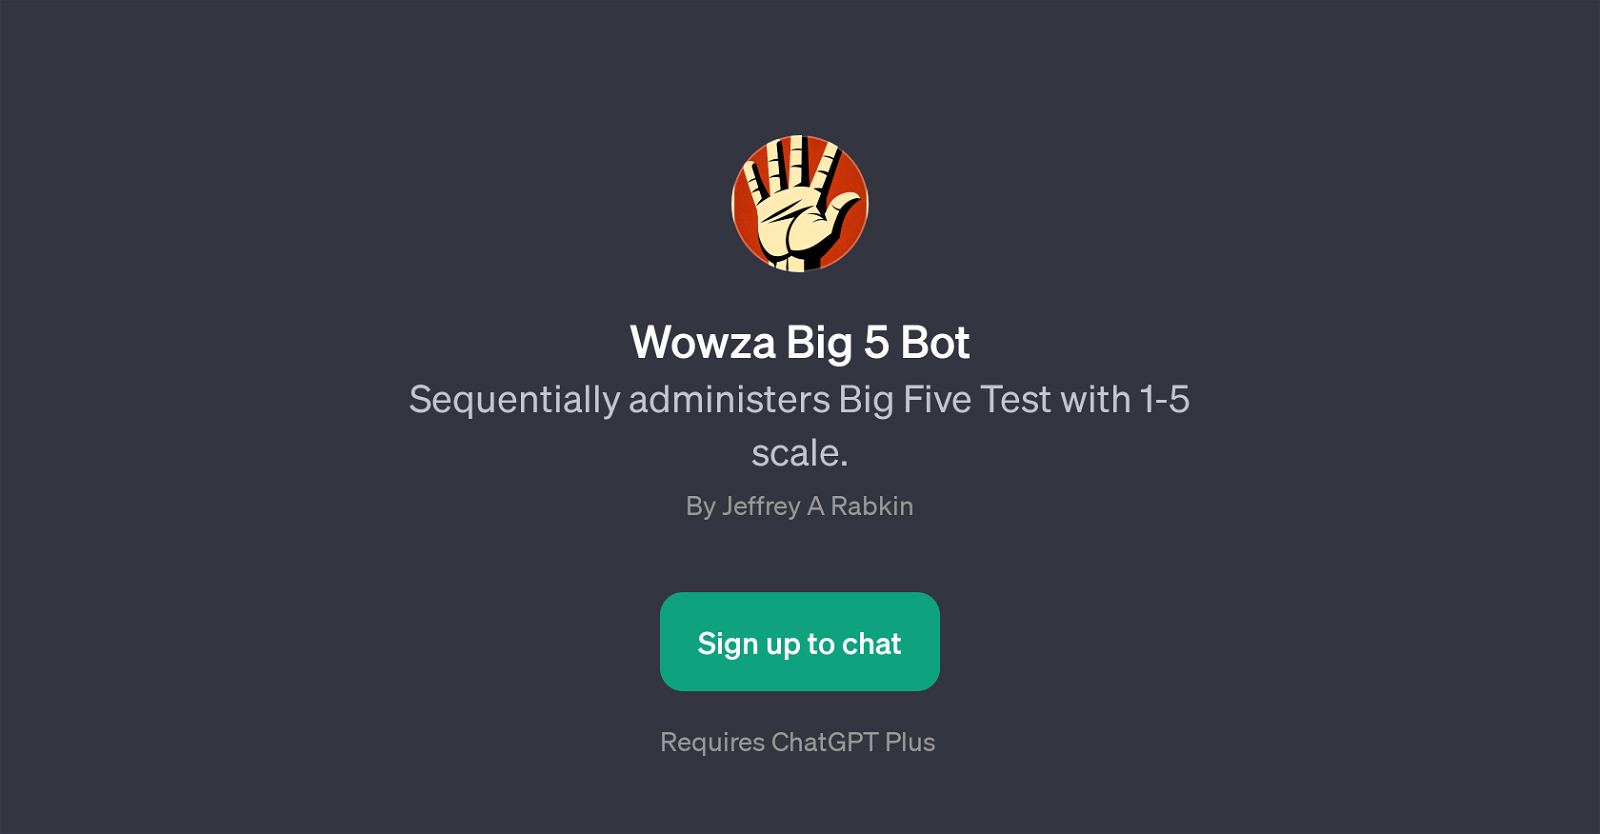 Wowza Big 5 Bot website